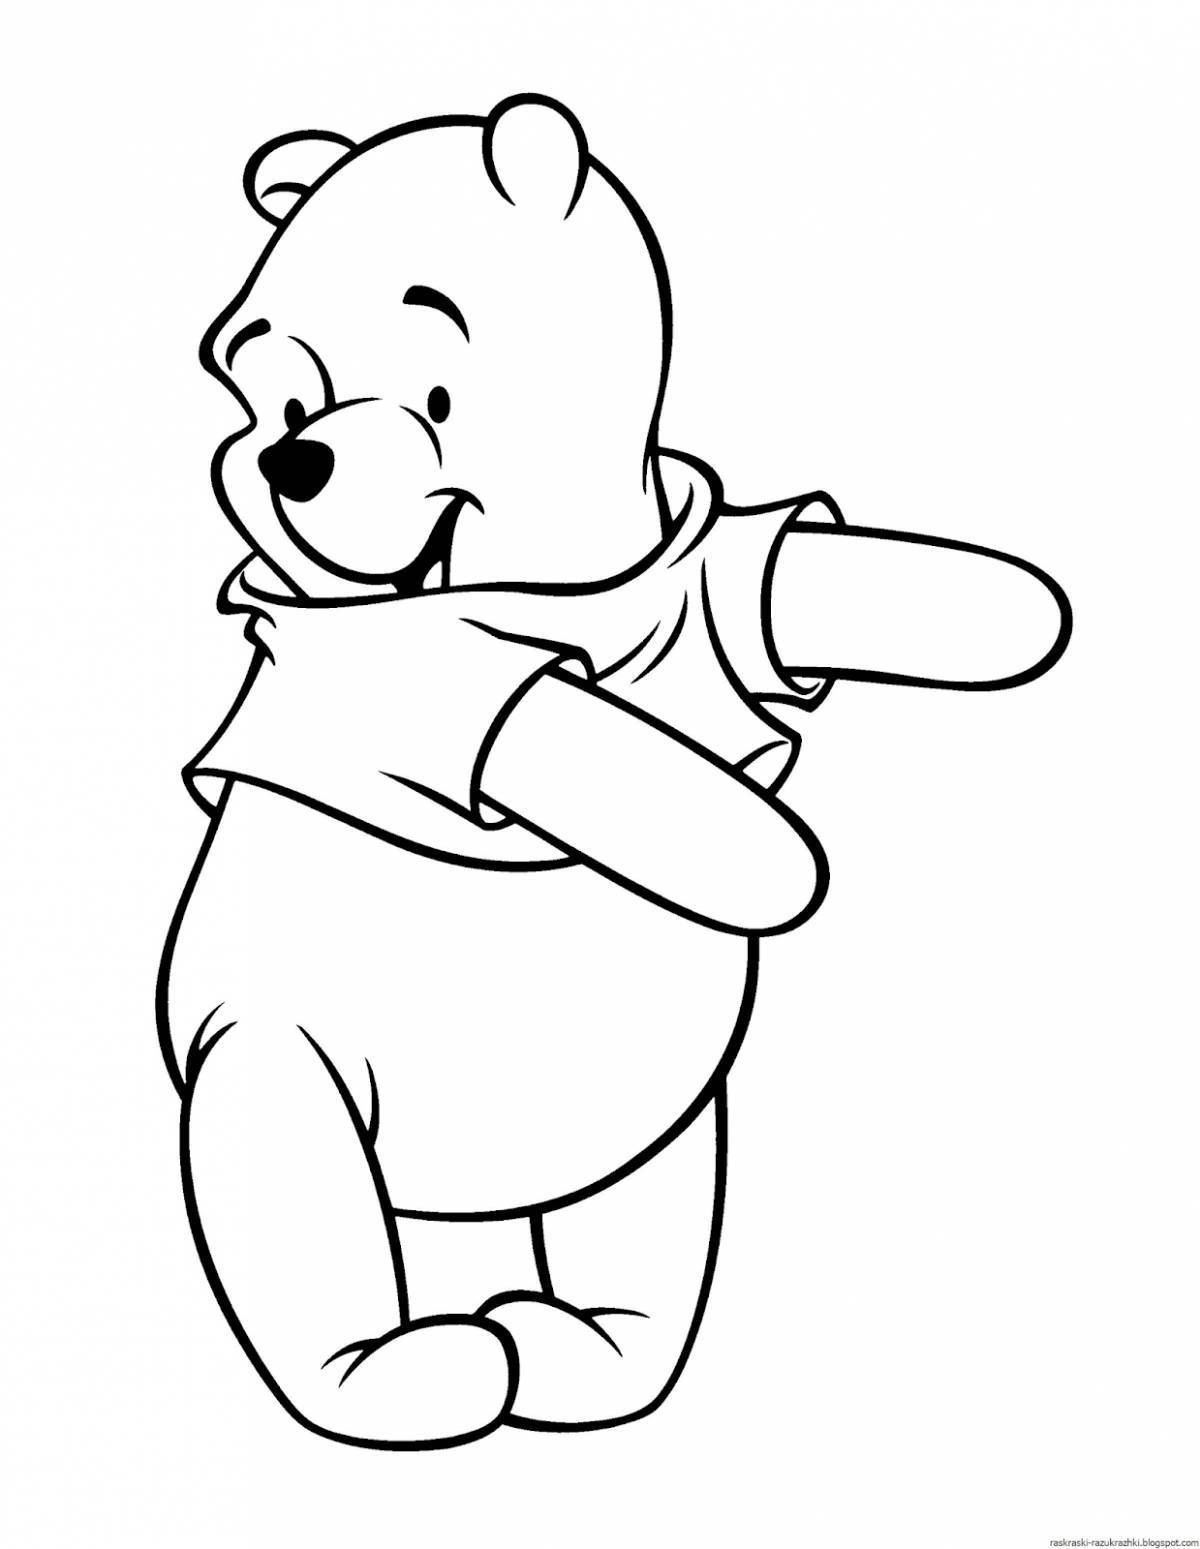 Winnie the pooh #10